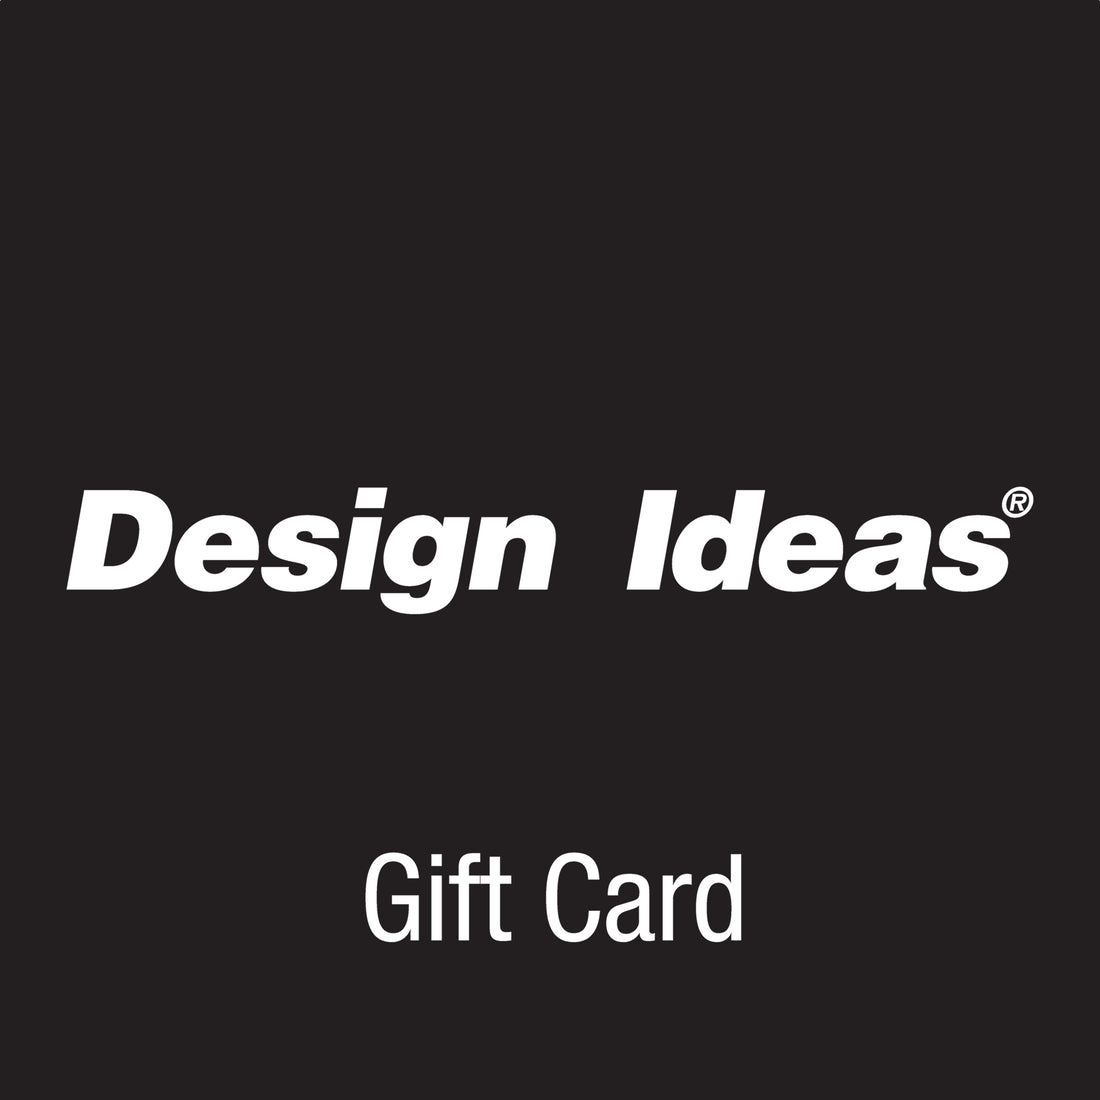 Design Ideas Gift Card